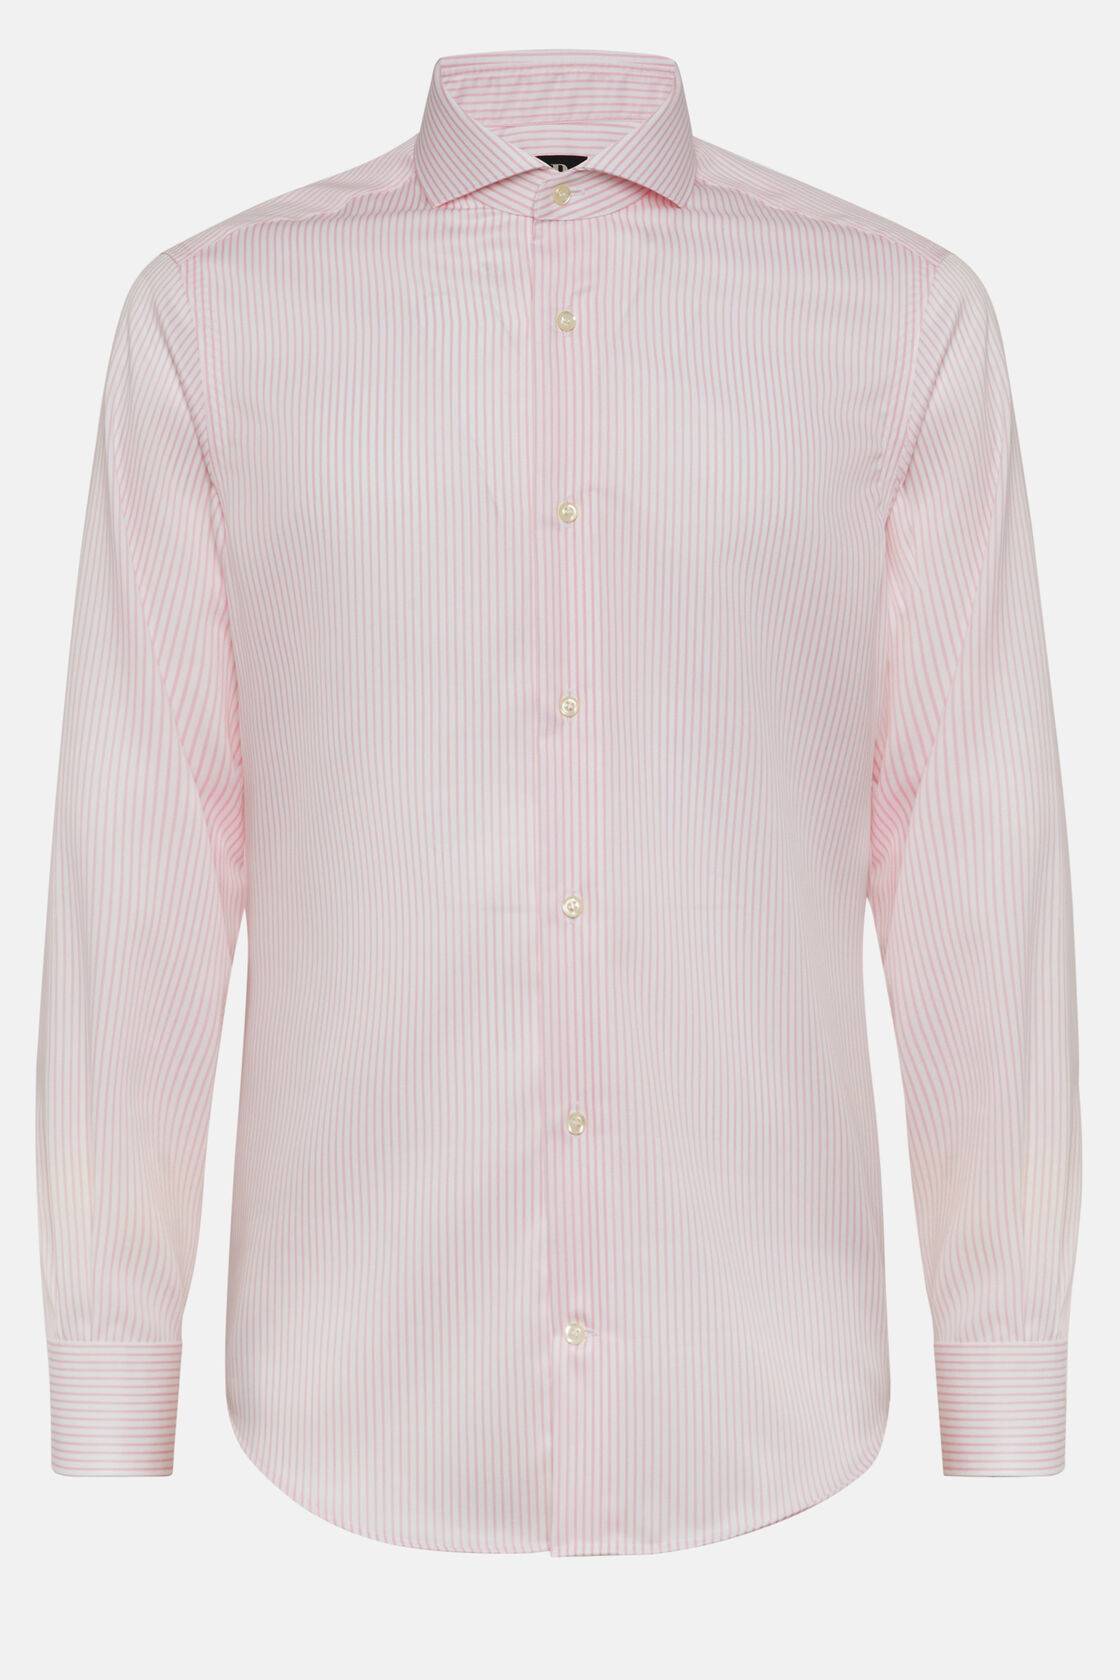 Slim Fit Pink Striped Cotton Twill Shirt, Pink, hi-res